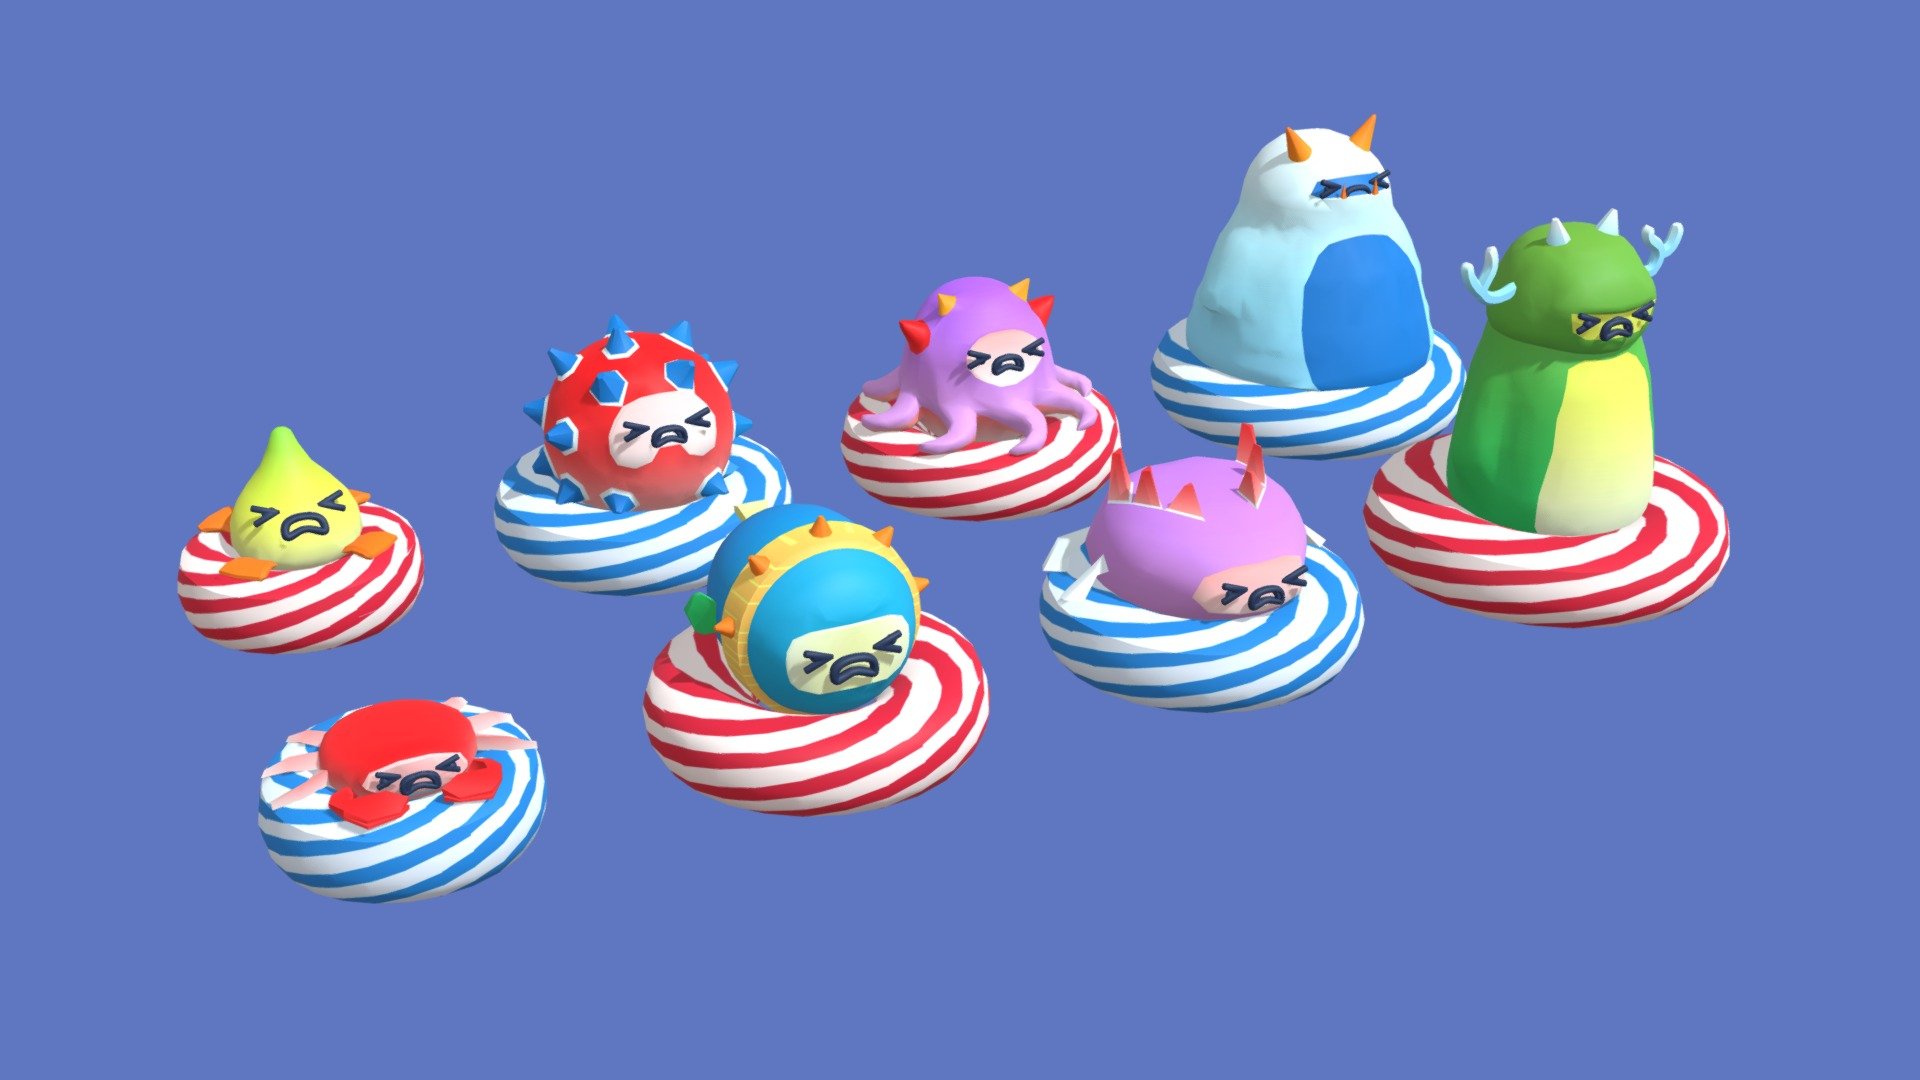 Fantasy funny monsters on inflatable circles - Monster cartoon animals - 3D model by Anastasiya Sdoba (@sdobnya) 3d model